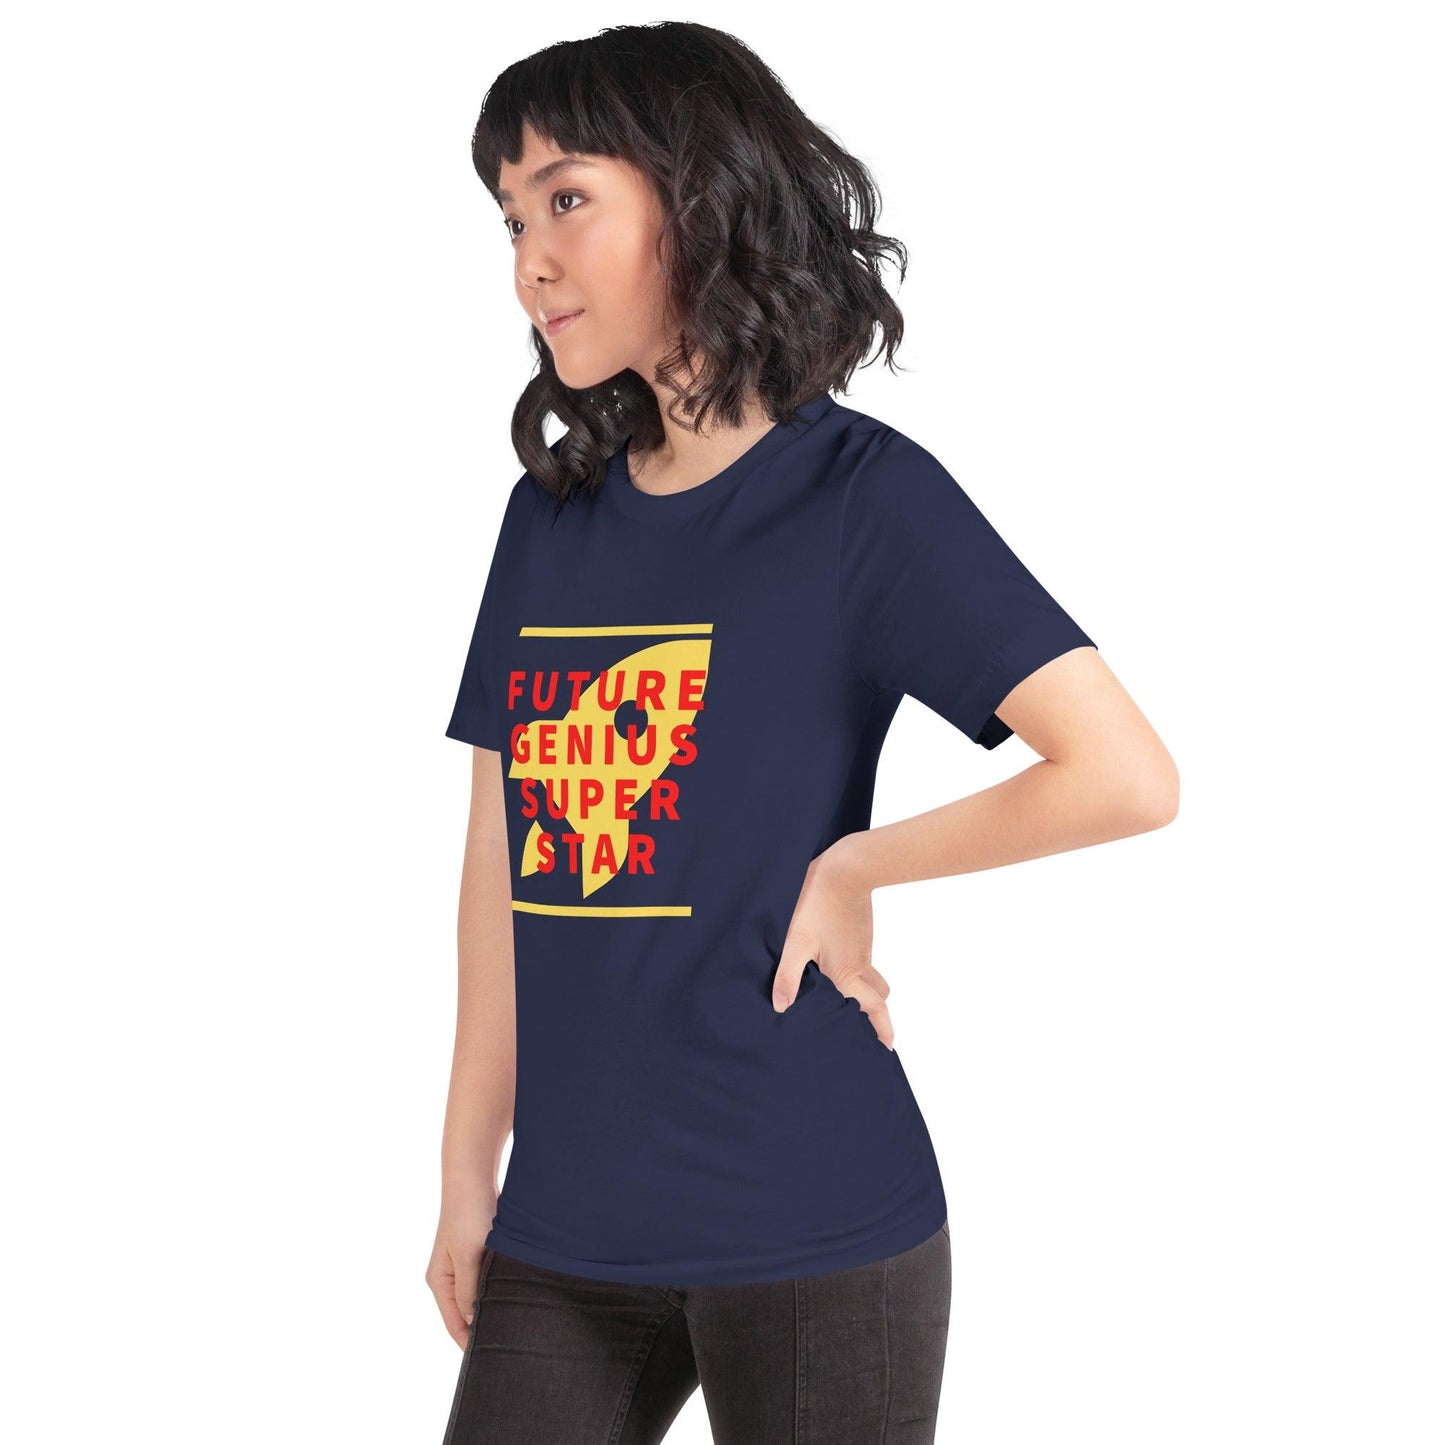 Future Genius Super Star Premium Short-Sleeve Women's T-Shirt - Affirm Effect